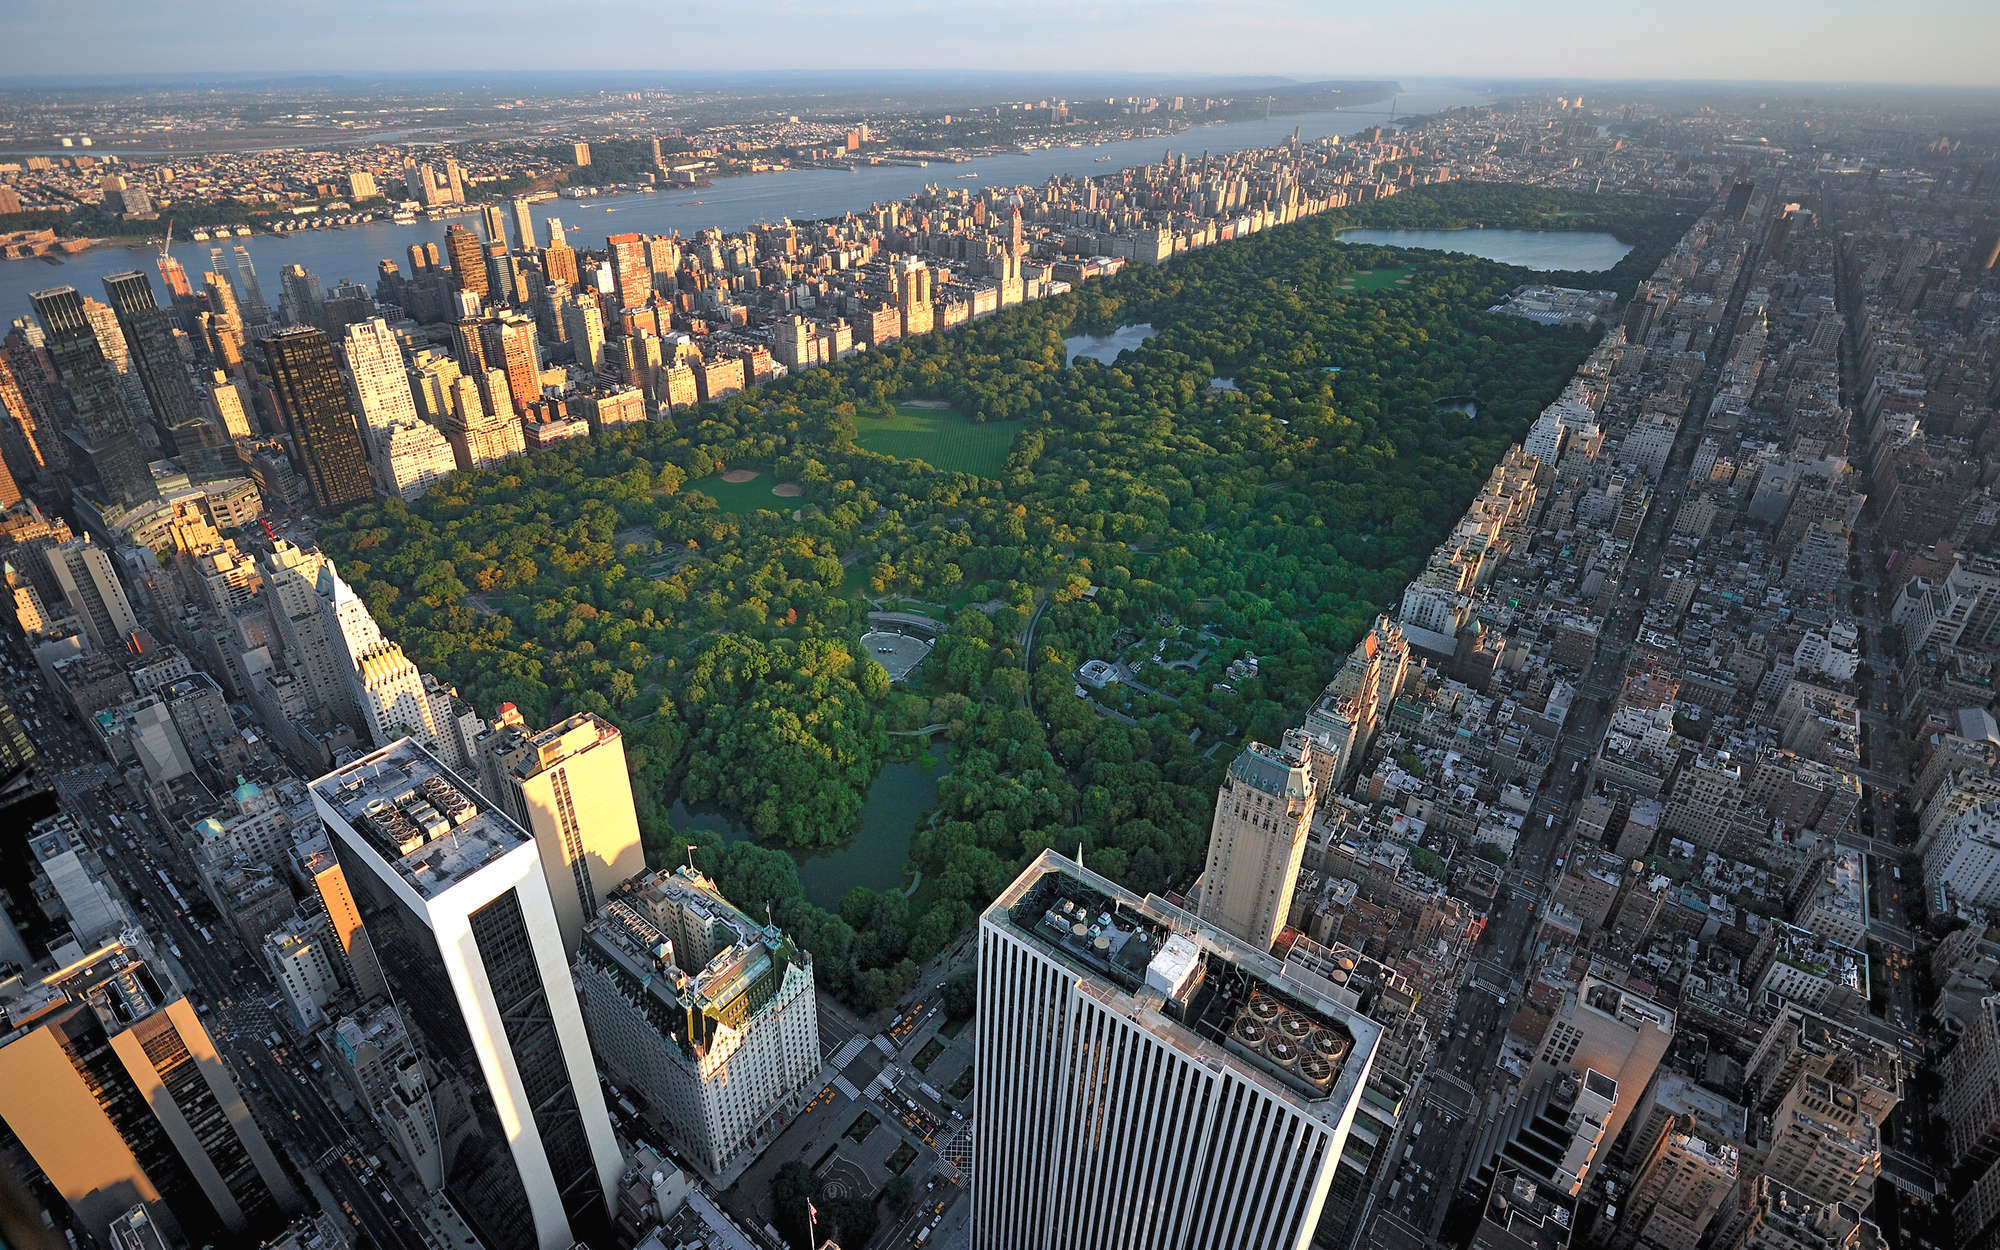             Photo wallpaper New York Central Park from above - Matt smooth fleece
        